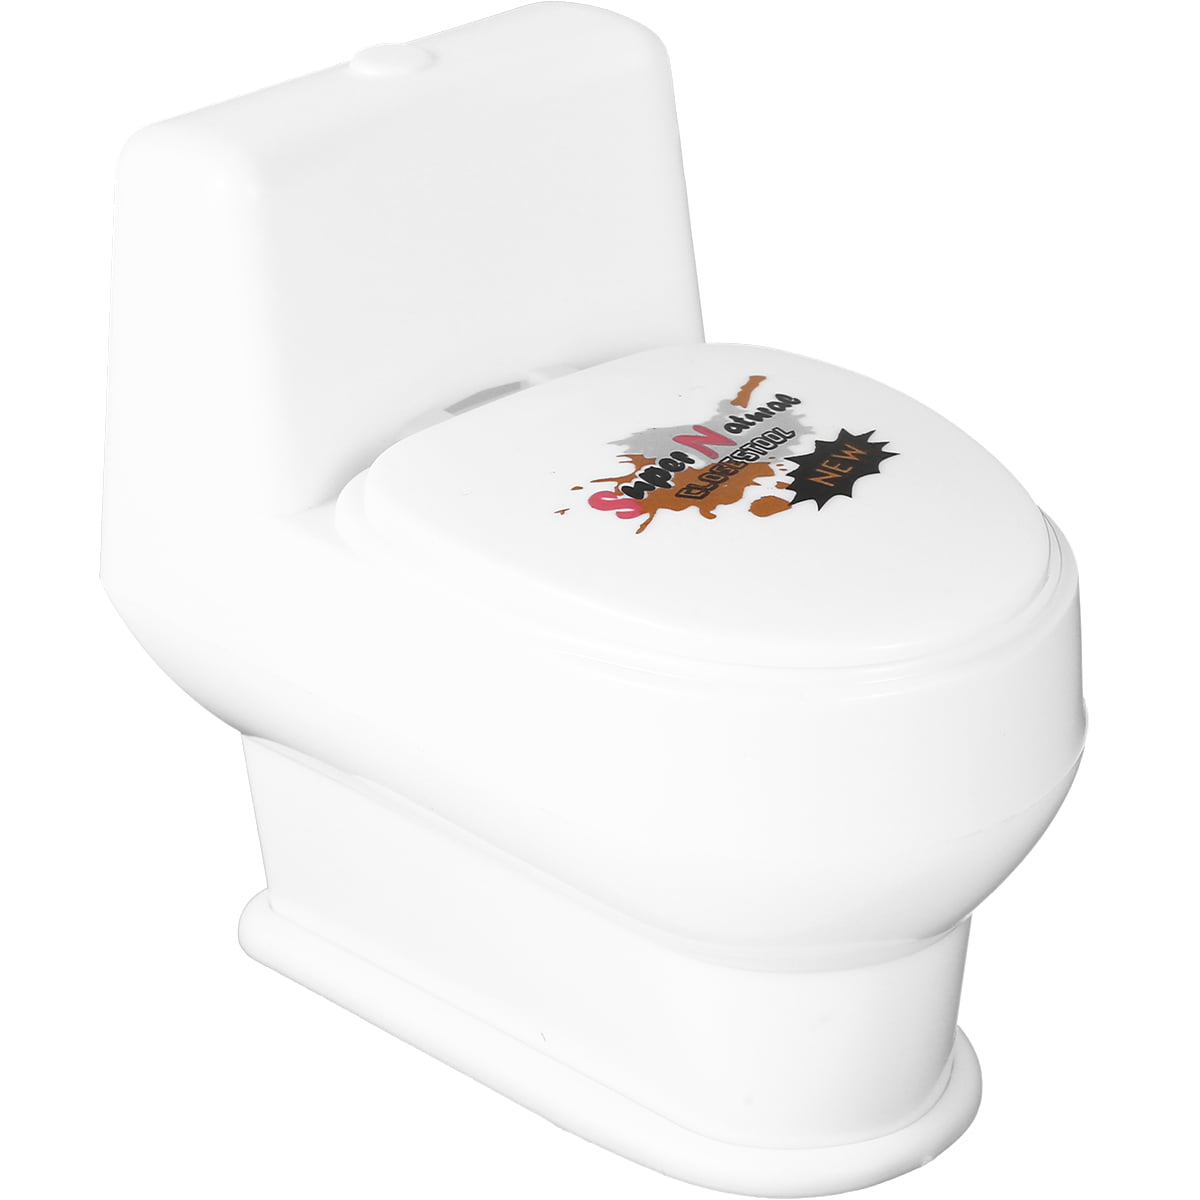 Squirter Toilet Bowl Water Funny Toy ~ GaG Prank Joke Classic Kid Gift 